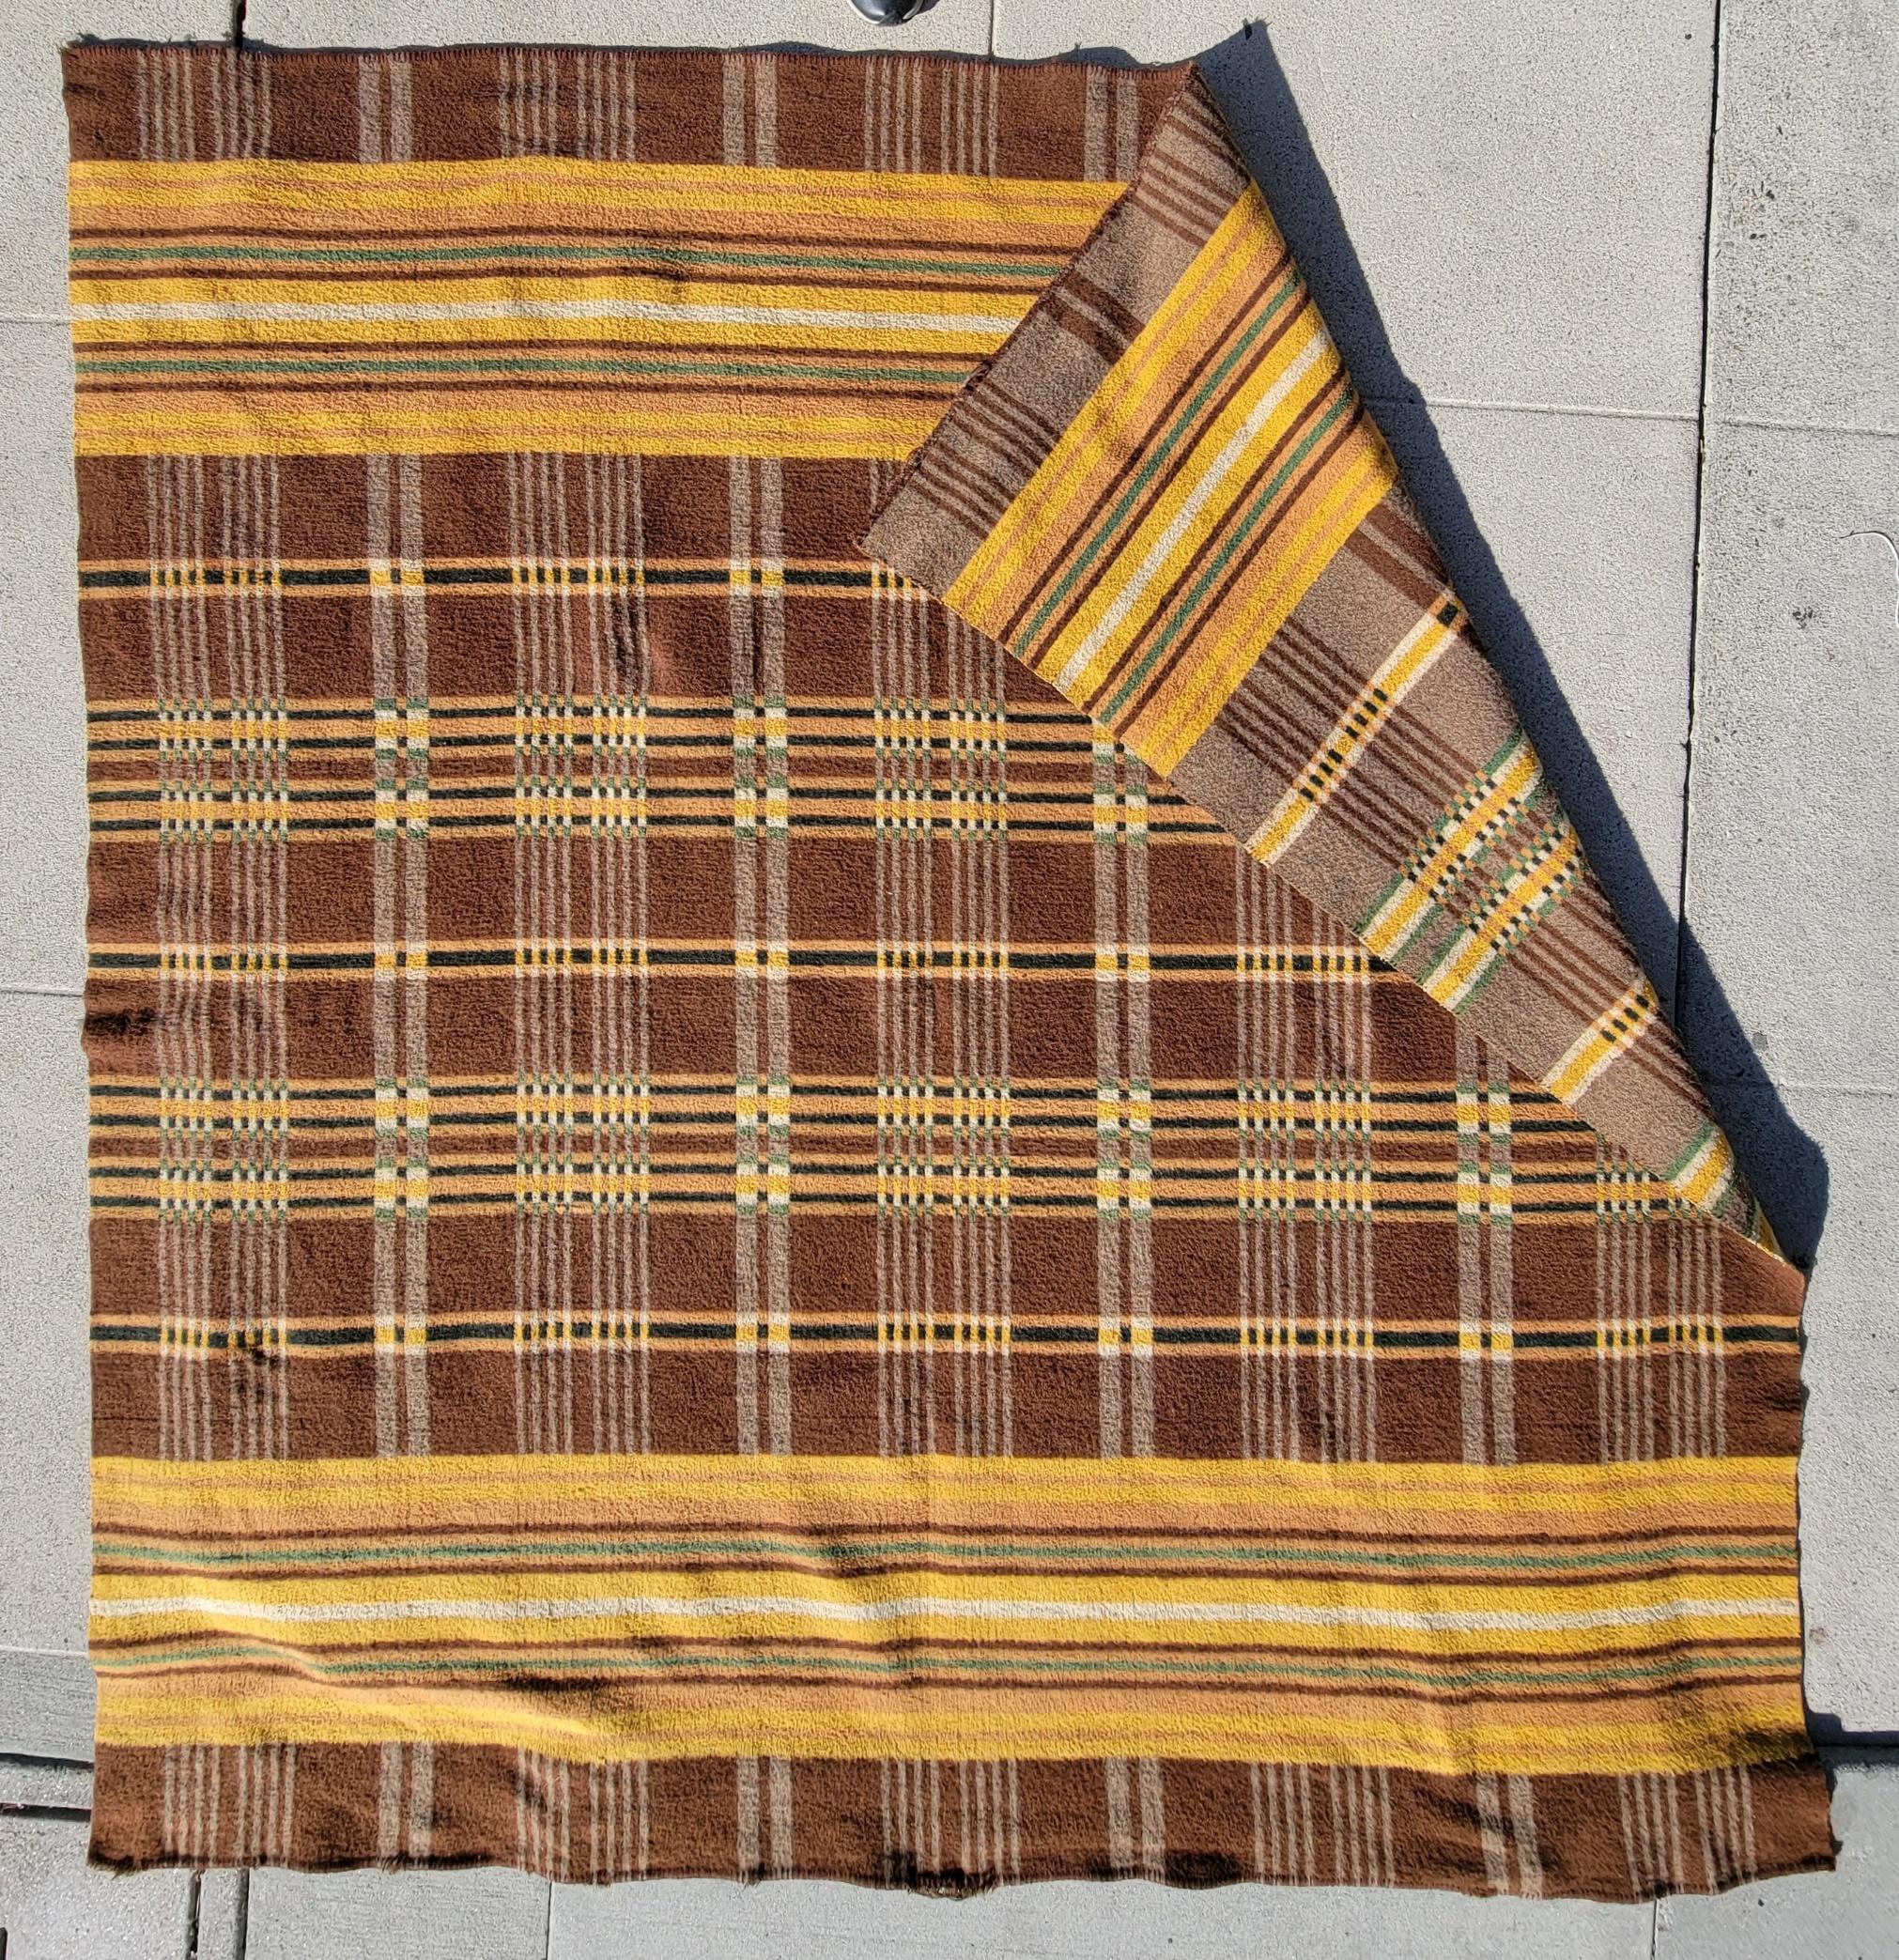 American 19thc Plaid Blanket All Wool Blanket For Sale